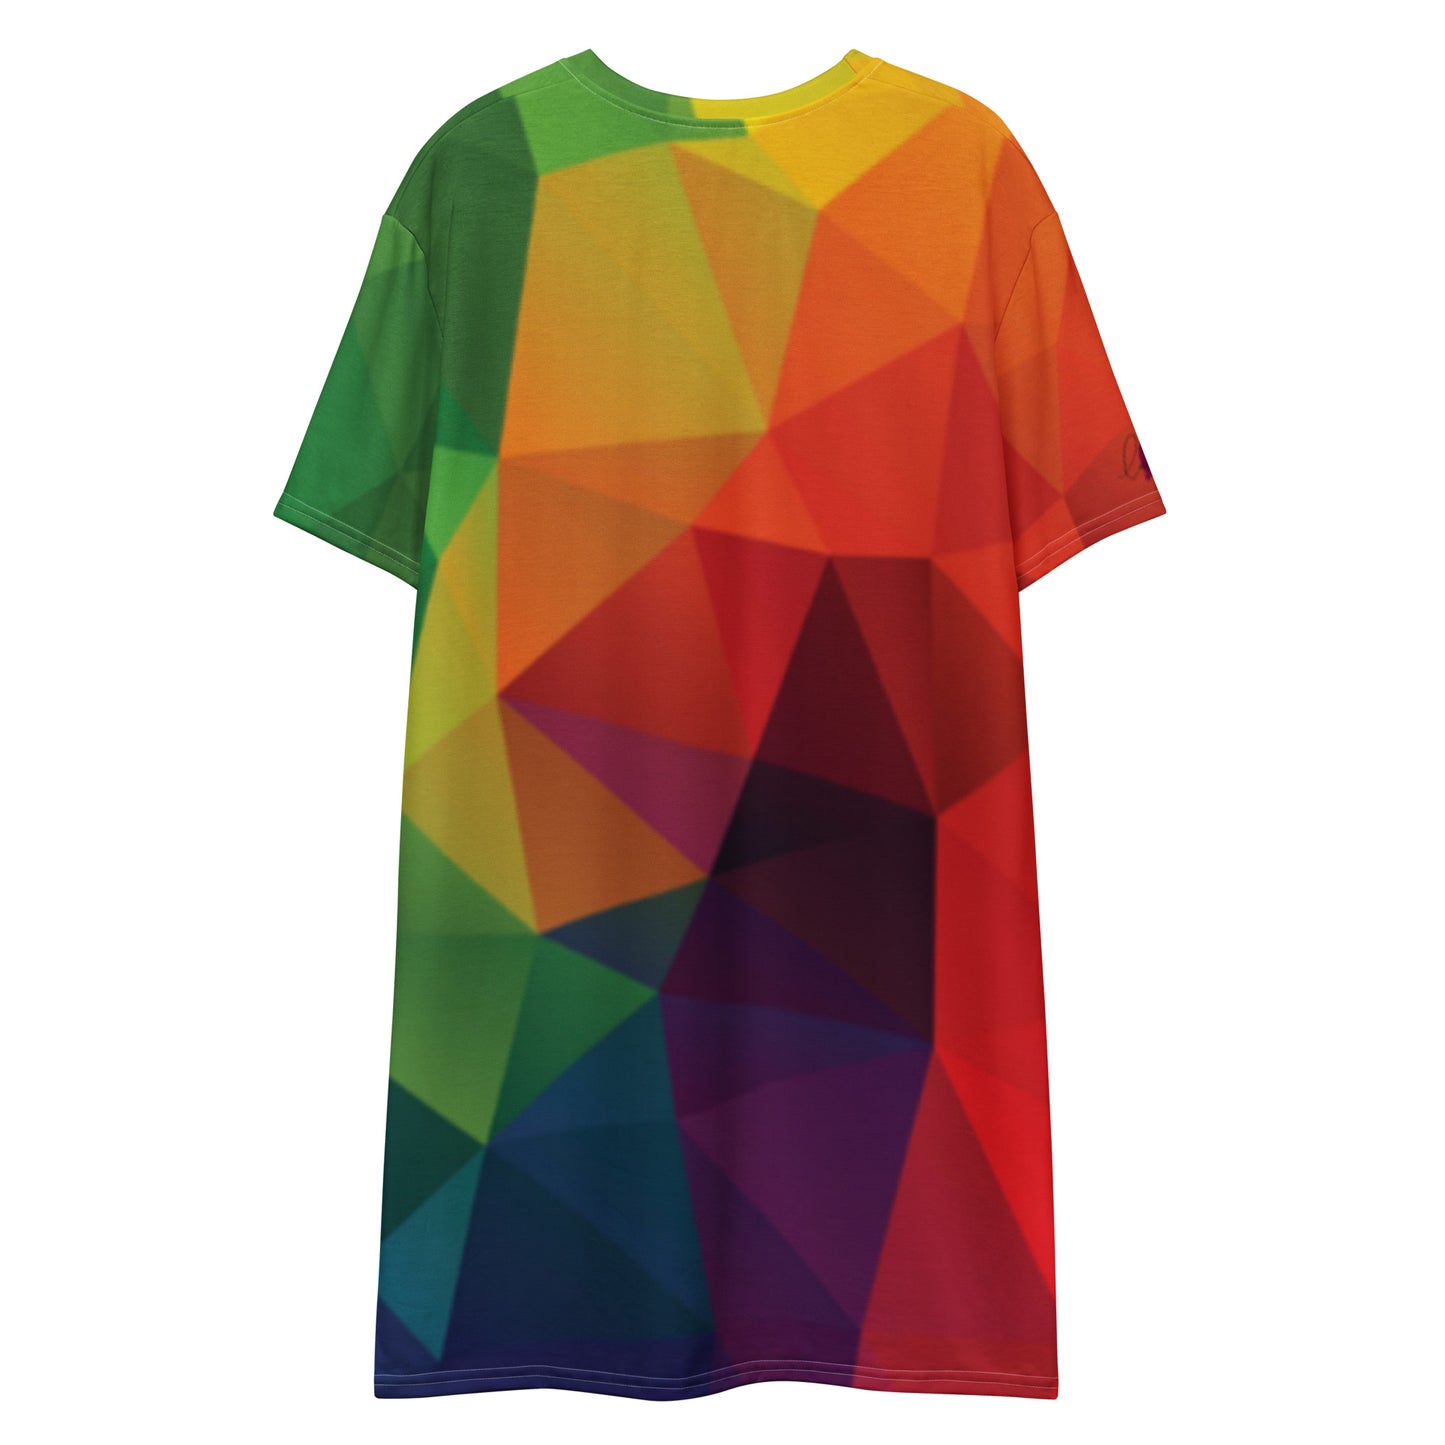 PRISM T-shirt dress